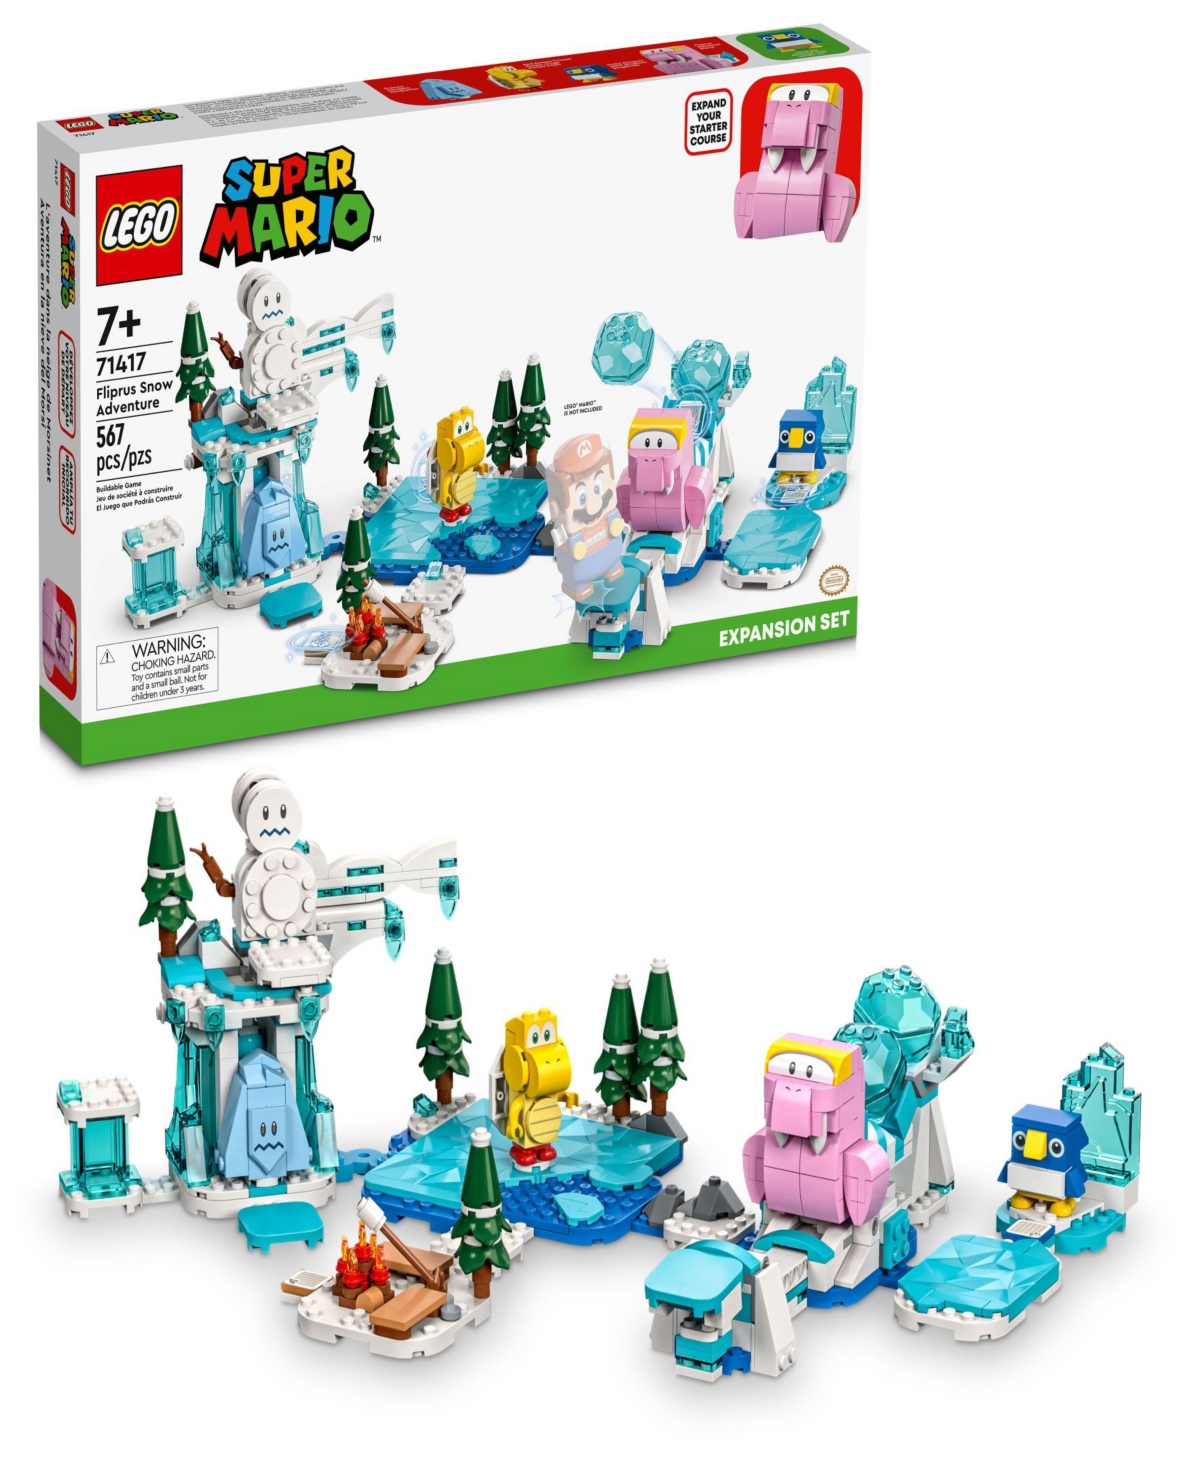 Lego Super Mario Fliprus Snow Adventure Expansion Set 71417 Building Set, 567 Pieces In Multicolor